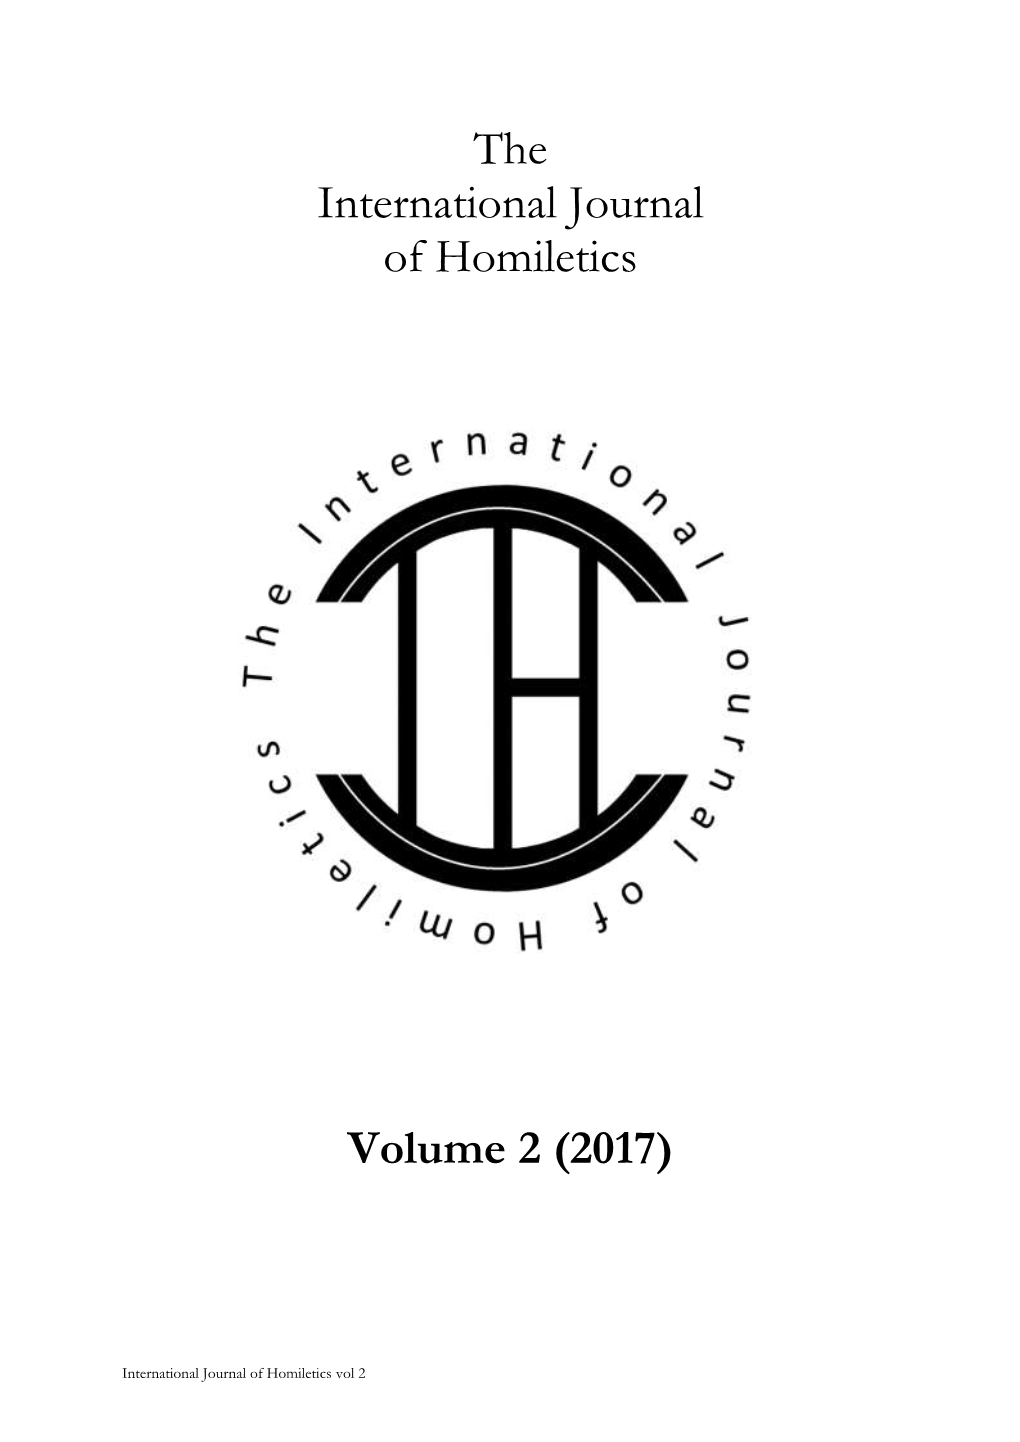 The International Journal of Homiletics Volume 2